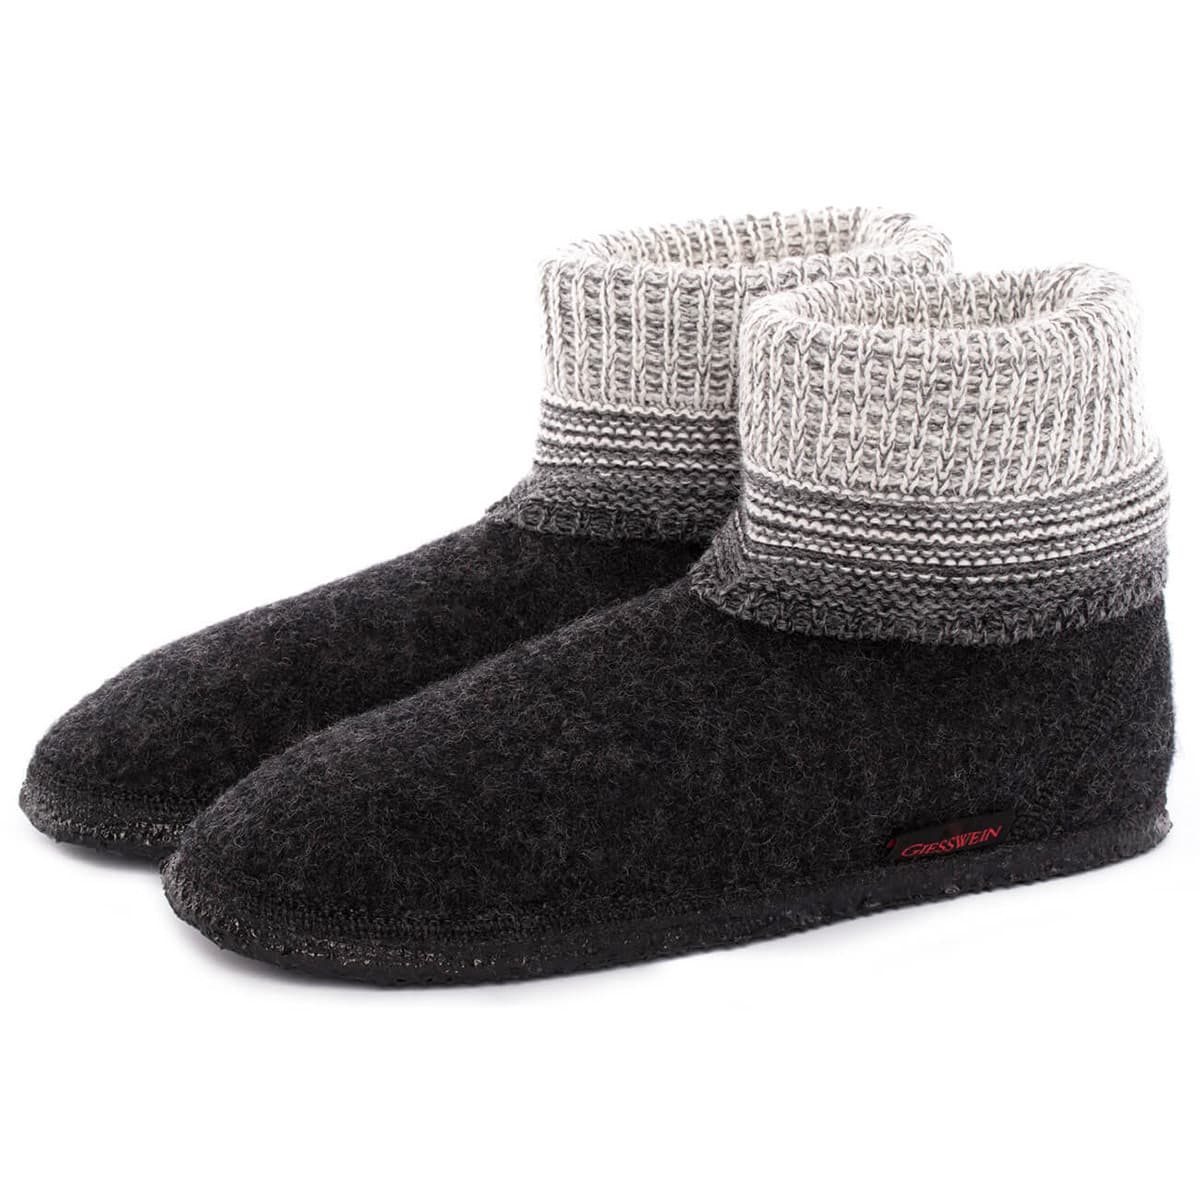 giesswein wool slippers